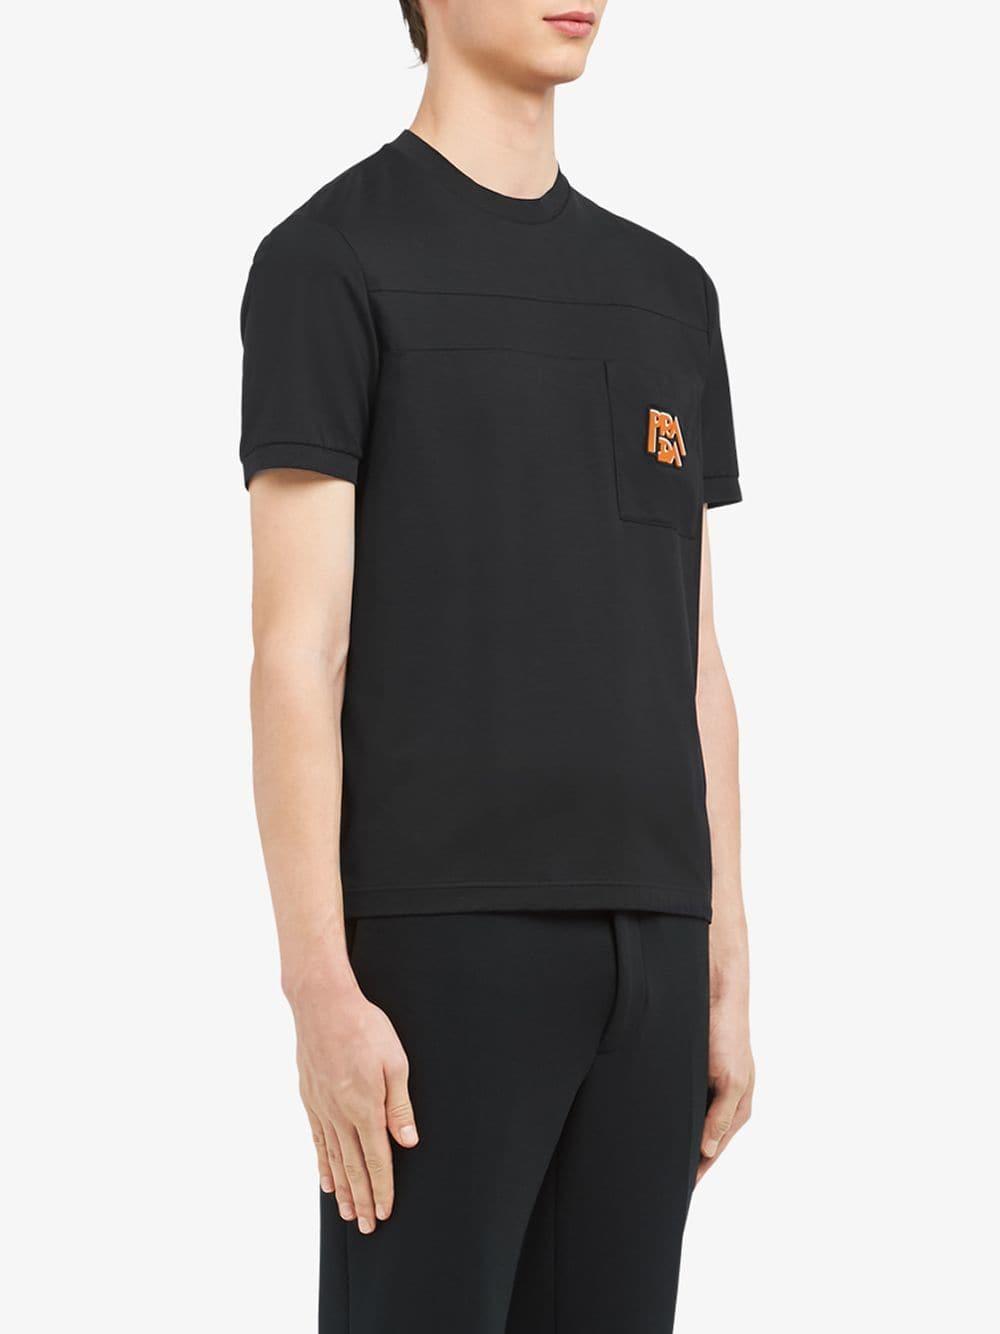 Prada Cotton Logo T-shirt in Black for Men - Lyst